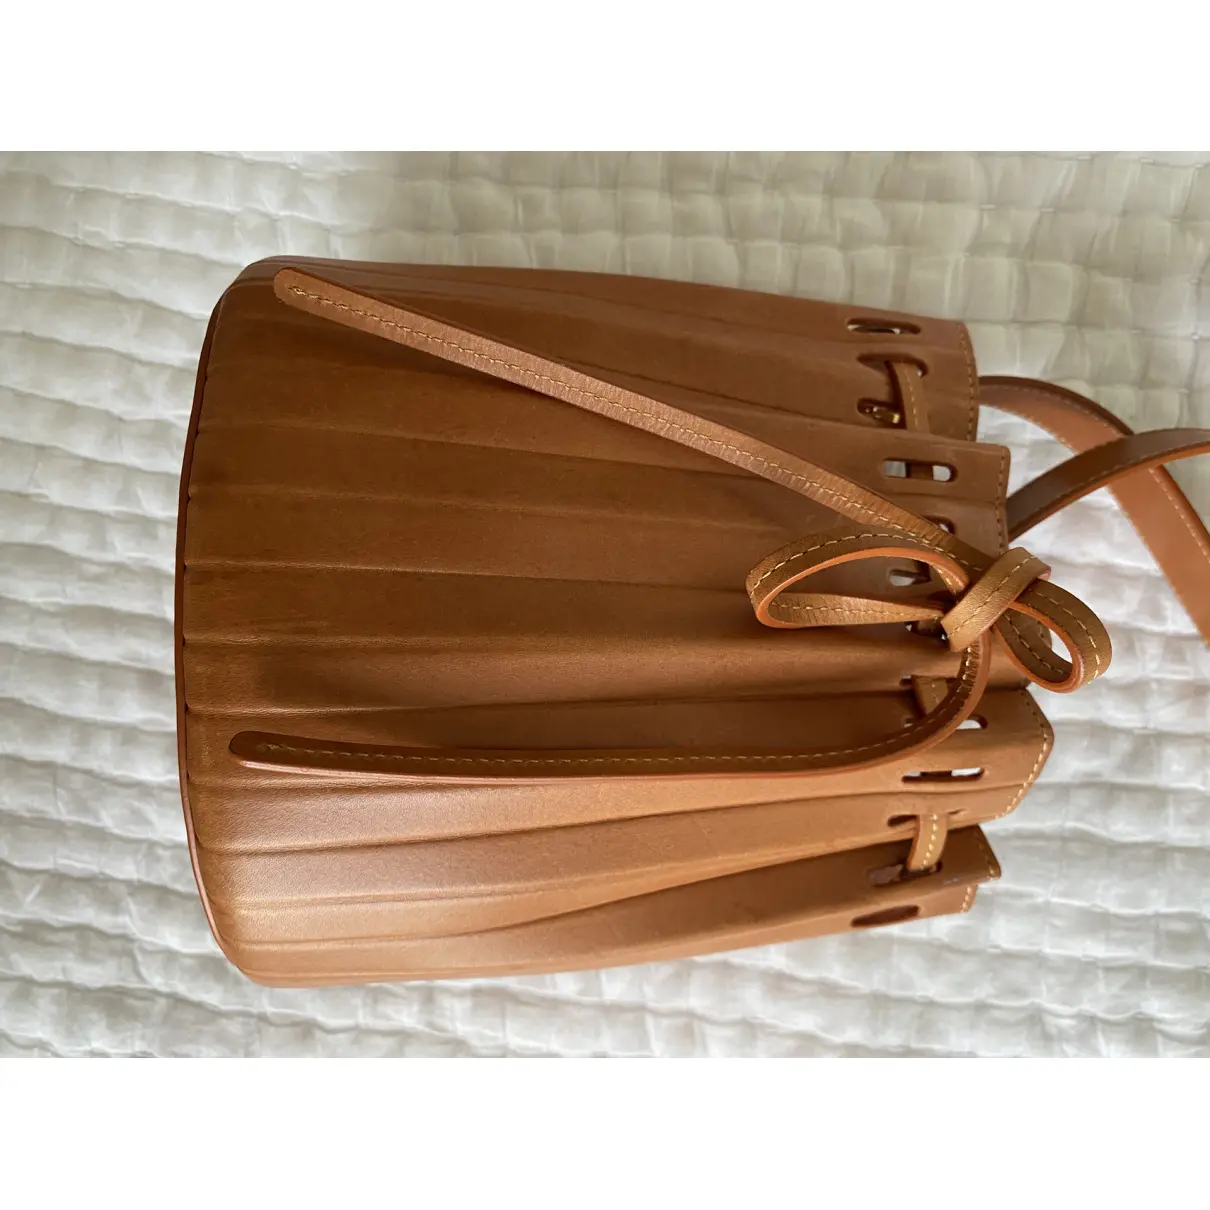 Buy Mansur Gavriel Bucket leather handbag online